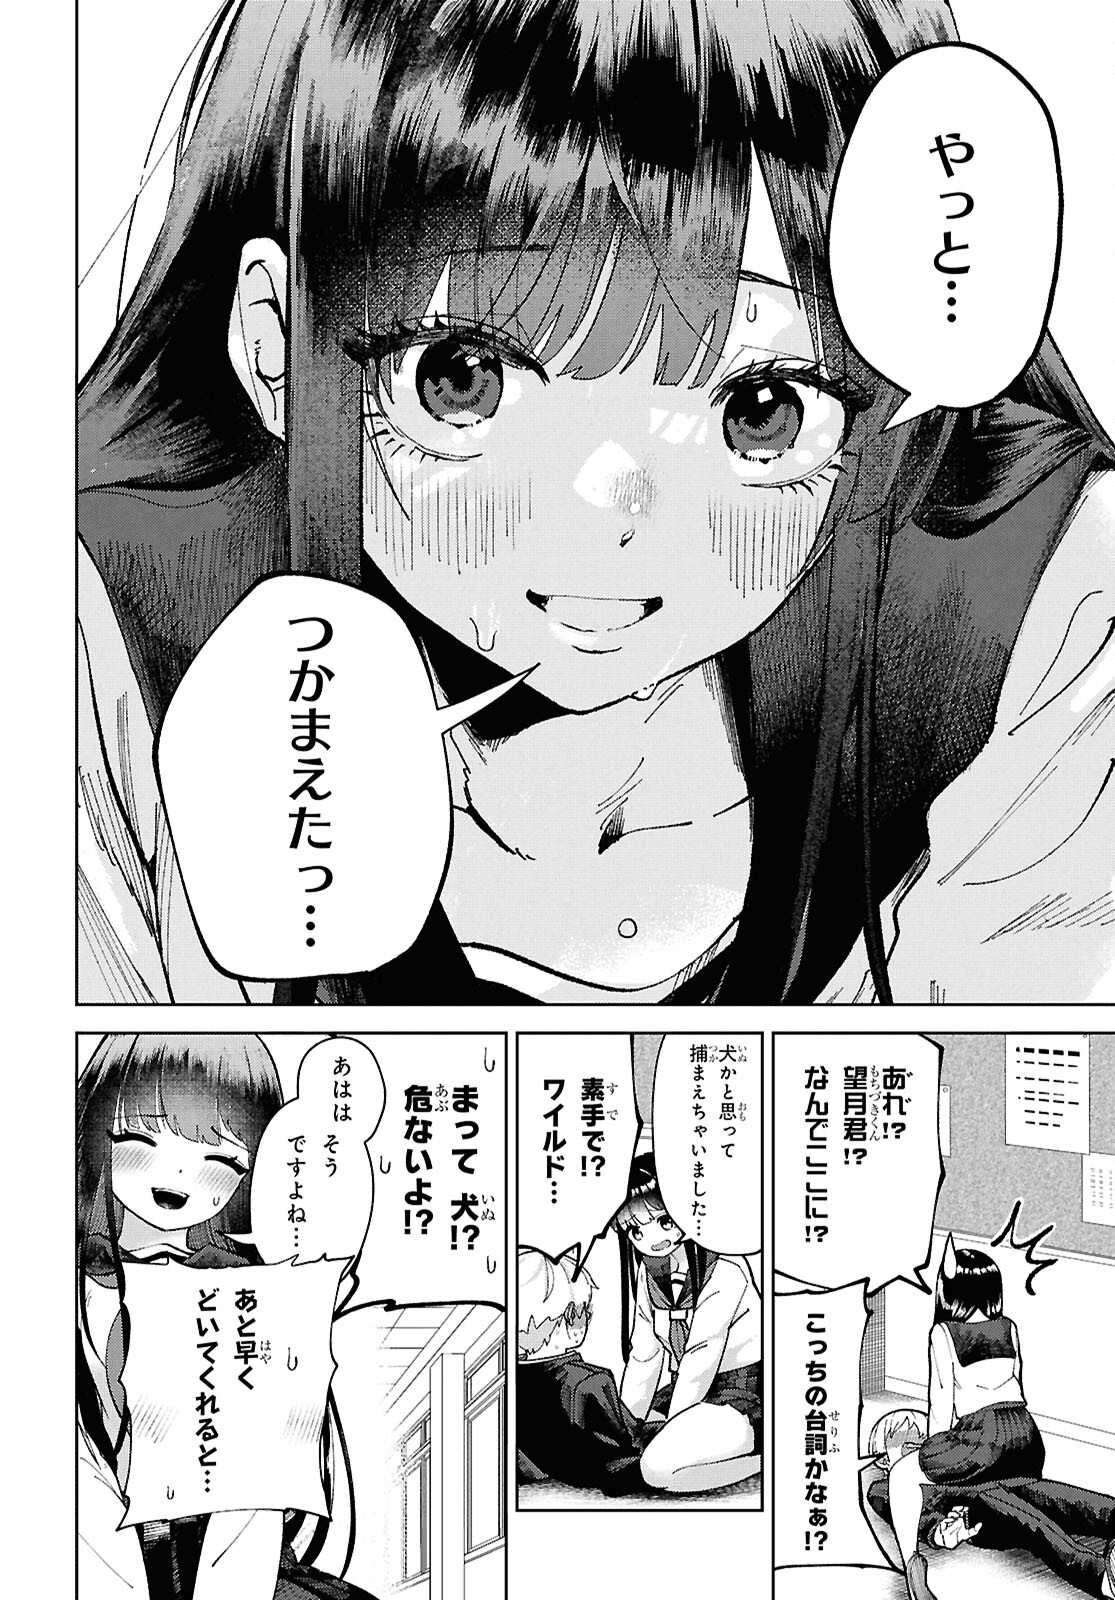 Garuru Girl - Chapter 4 - Page 8